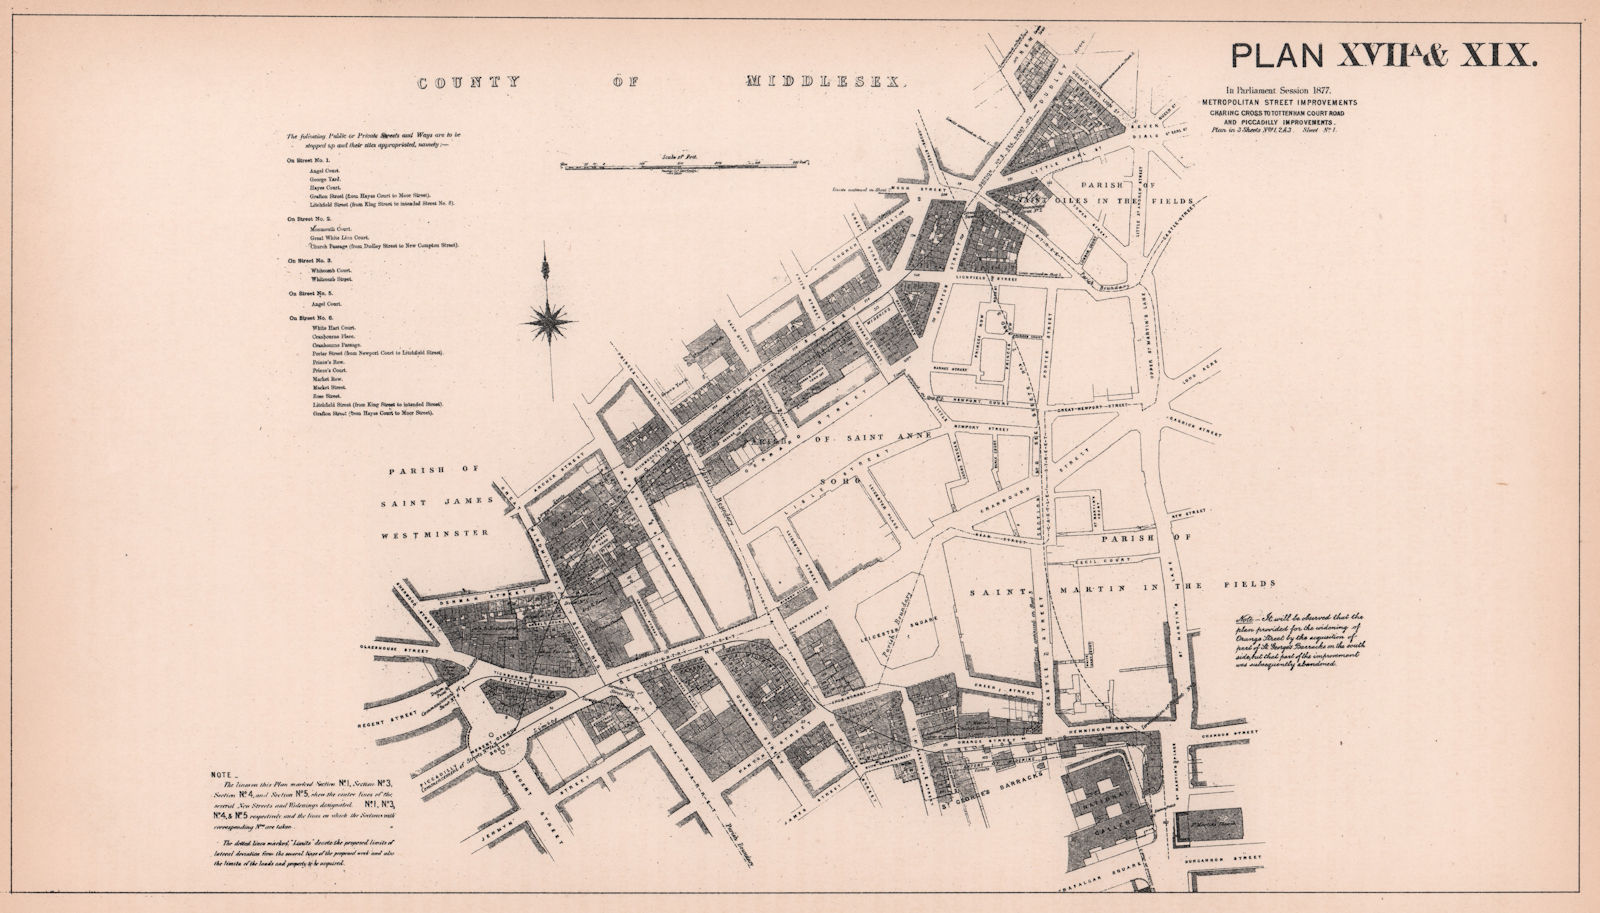 1877 Shaftesbury Avenue & Charing Cross Road development. West End 1898 map